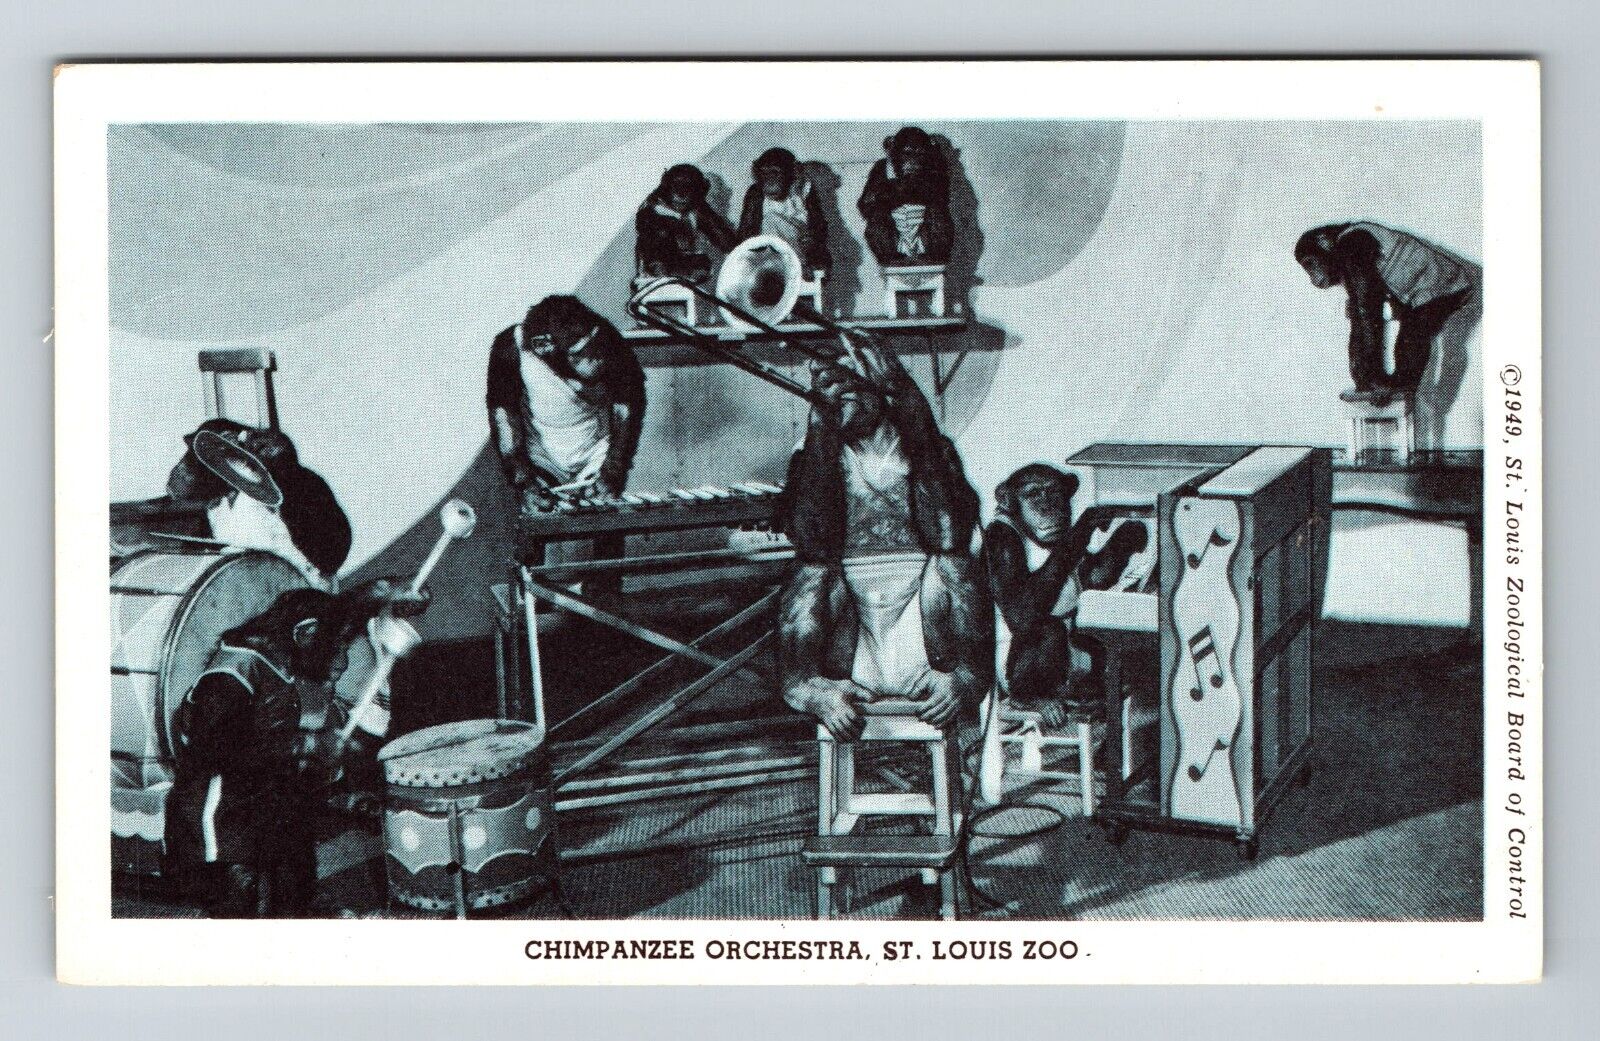 St Louis MO-Missouri, Chimpanzee Orchestra, St Louis Zoo, Vintage Postcard